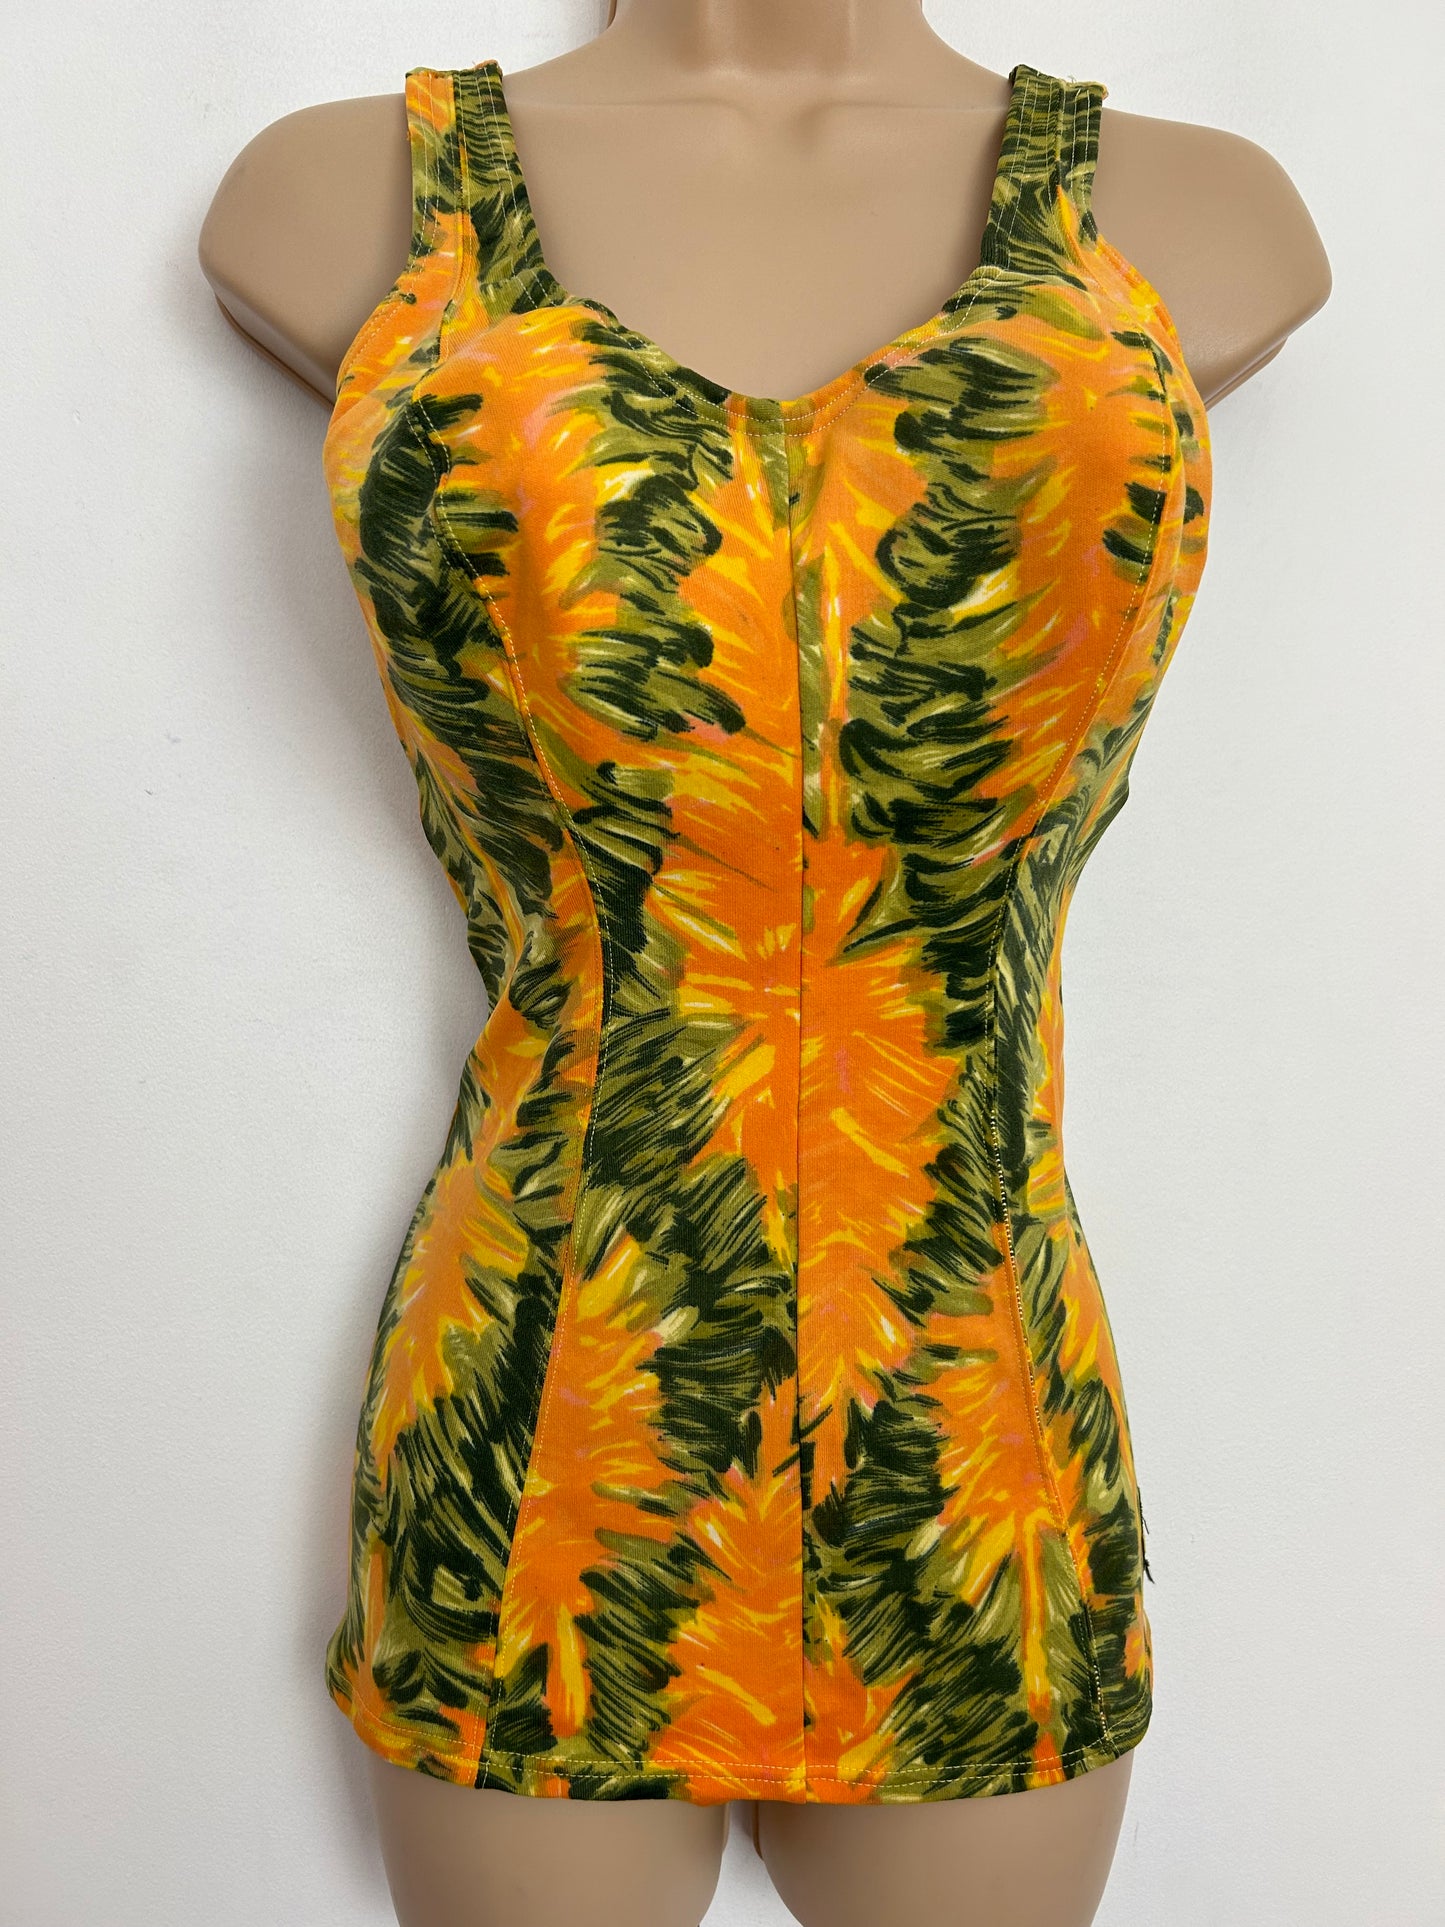 Vintage 1960s TRIUMPH FABIOLA UK Size 10 Orange & Green Abstract Print Skirted Swimsuit Bathing Costume